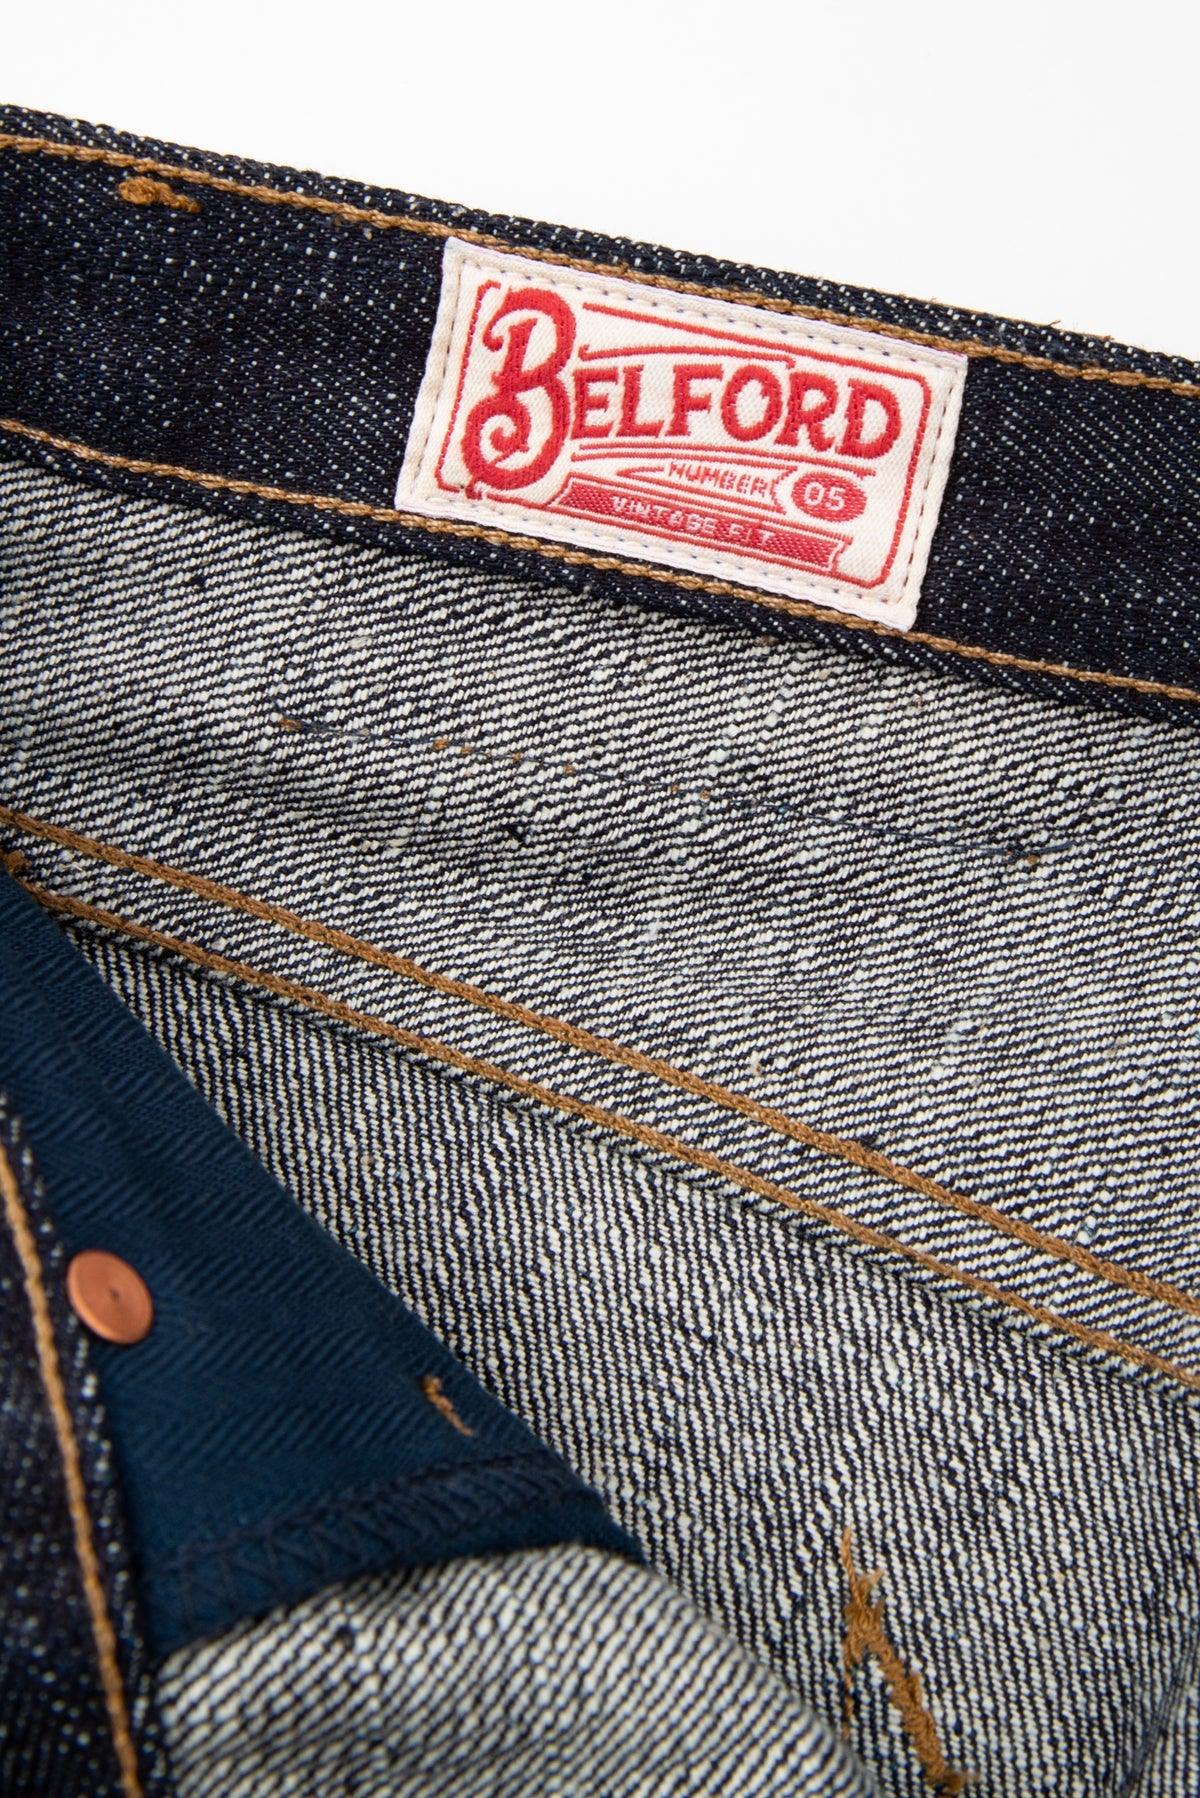 Freenote Cloth Belford Straight Cut - 17oz Indigo Slub Selvedge Denim - Guilty Party